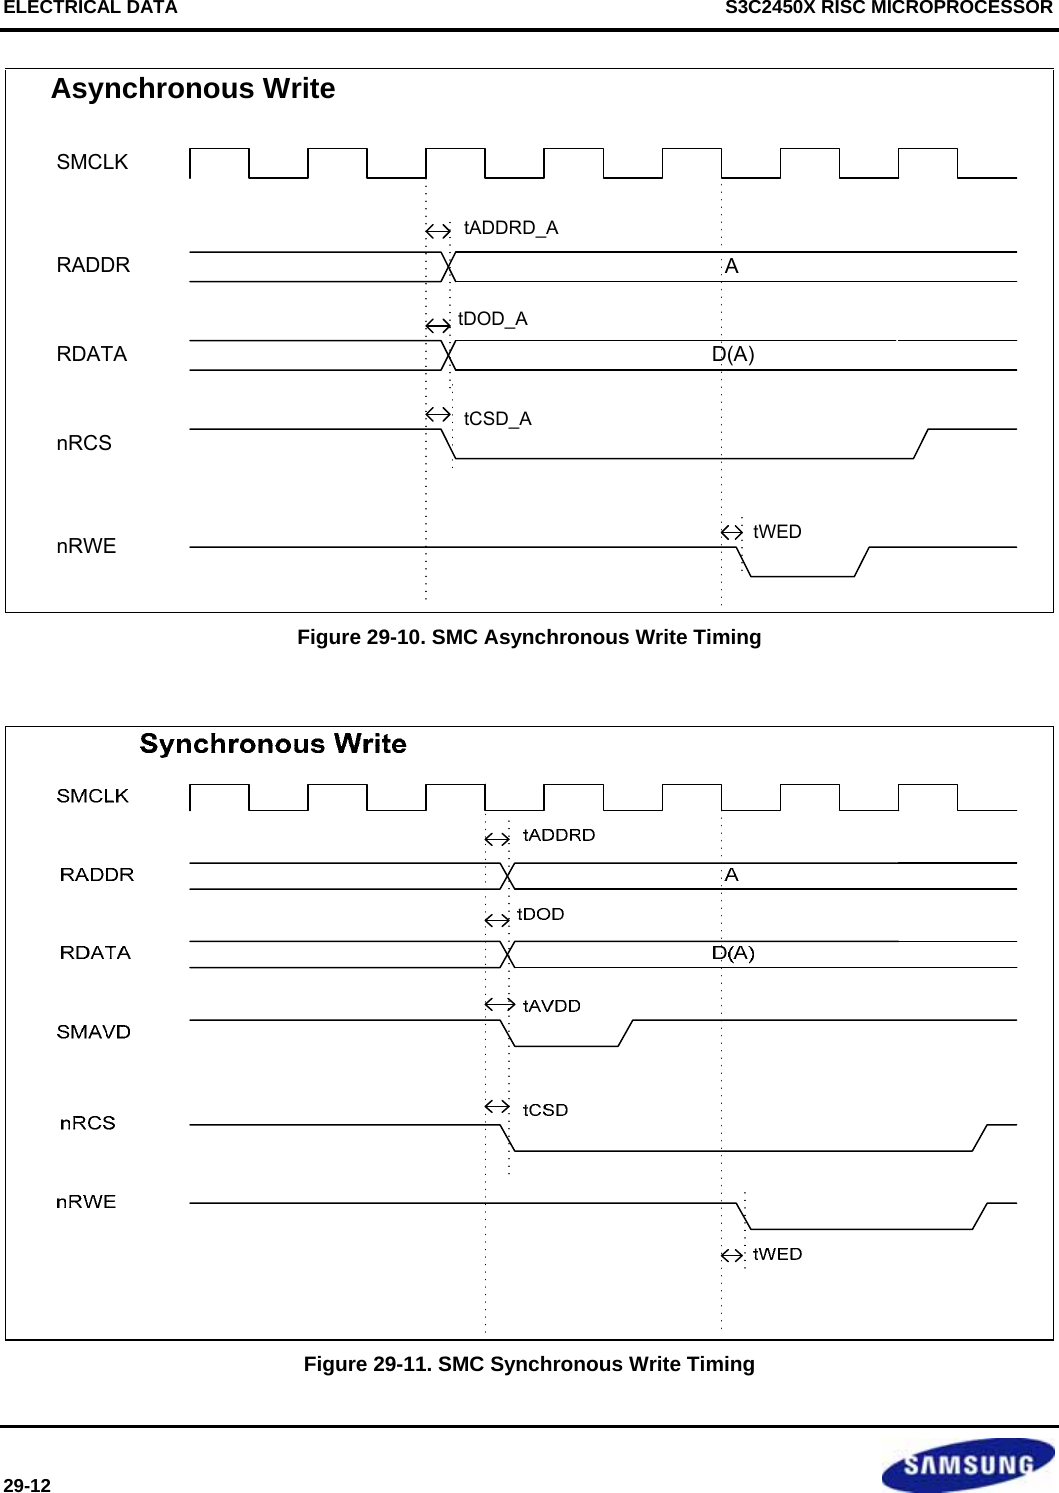 ELECTRICAL DATA    S3C2450X RISC MICROPROCESSOR 29-12   tCSD_AtADDRD_AtWEDtDOD_AAsynchronous WriteSMCLKRADDRRDATAnRCSnRWEAD(A) Figure 29-10. SMC Asynchronous Write Timing   Figure 29-11. SMC Synchronous Write Timing 